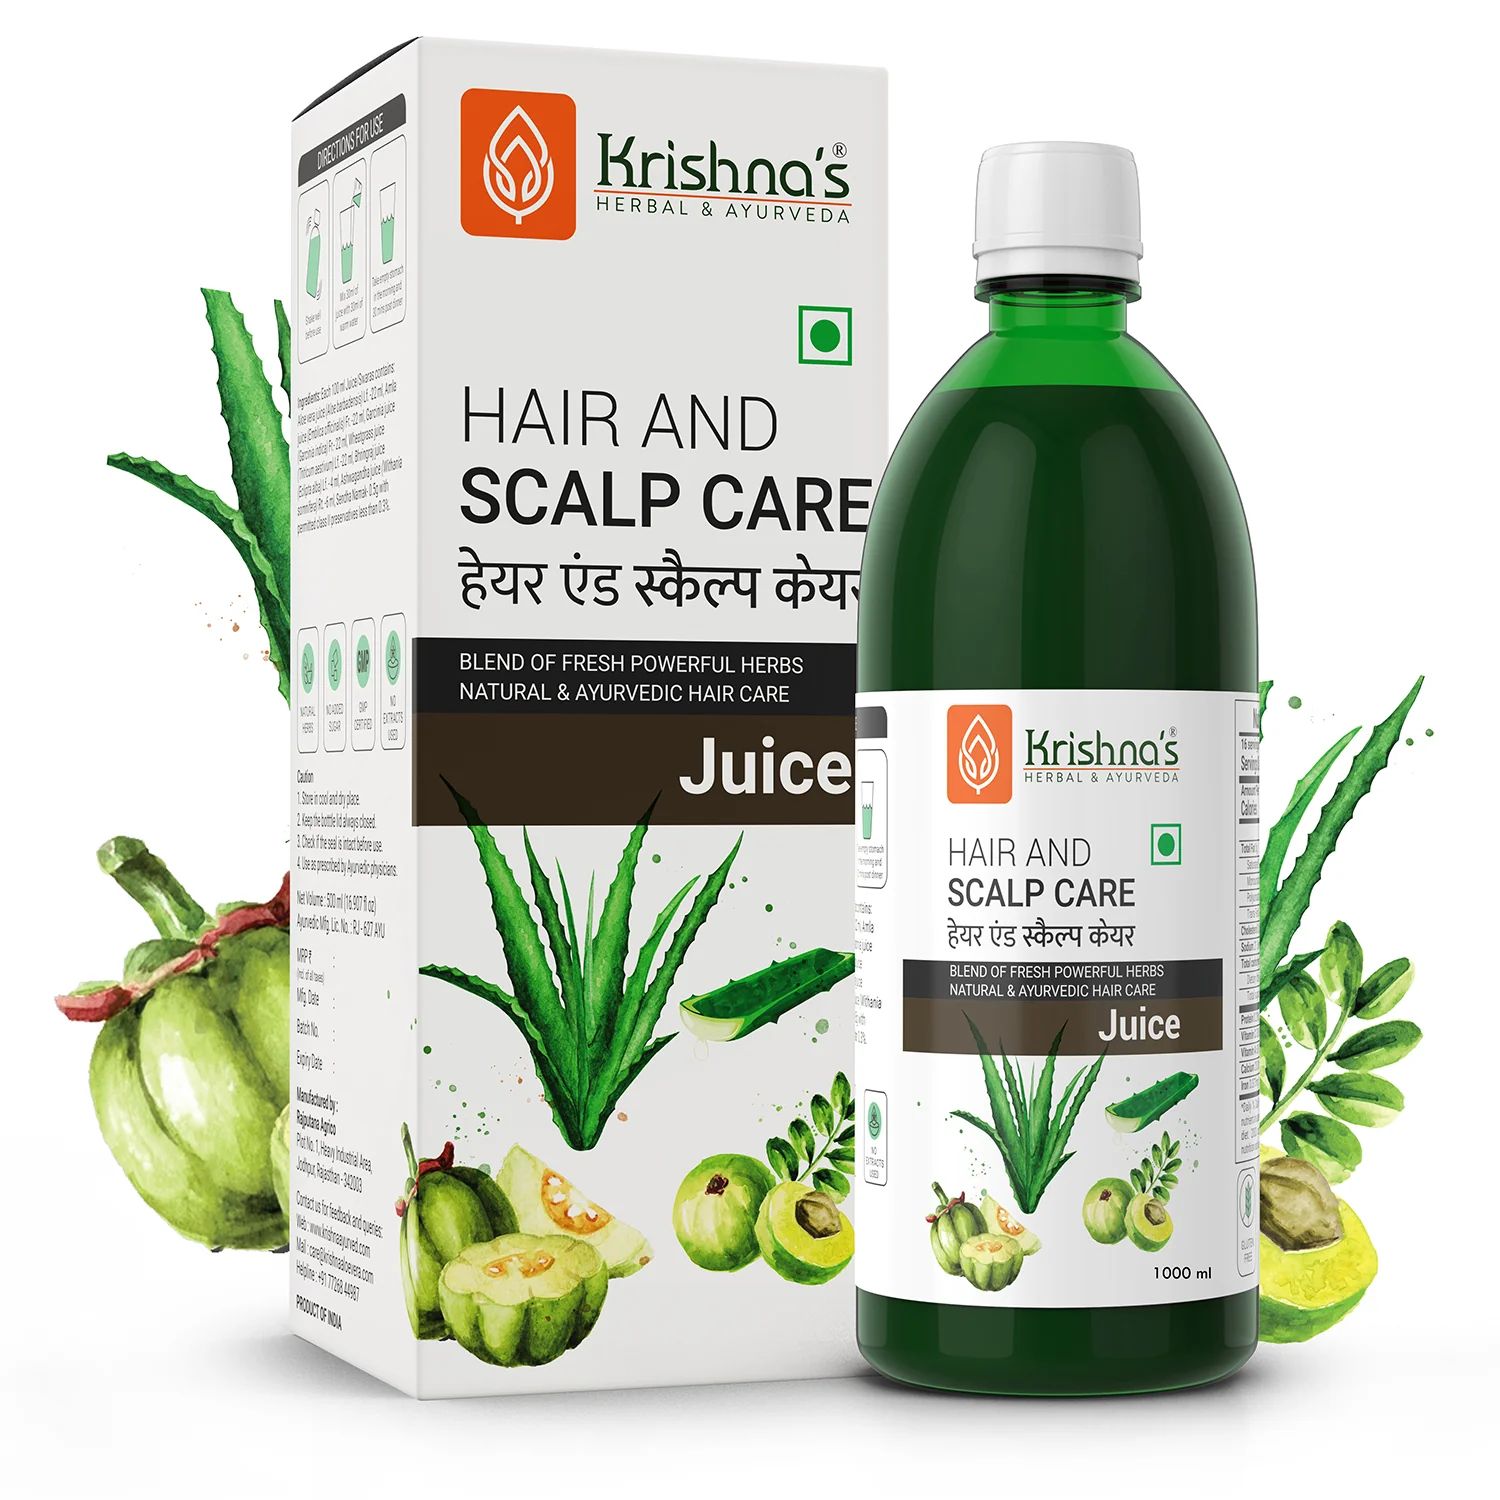 KRISHNA&#39;S HAIR AND SCALP CARE JUICE
Blend of Powerful herbs | Natural ayurvedic hair care 1000ml